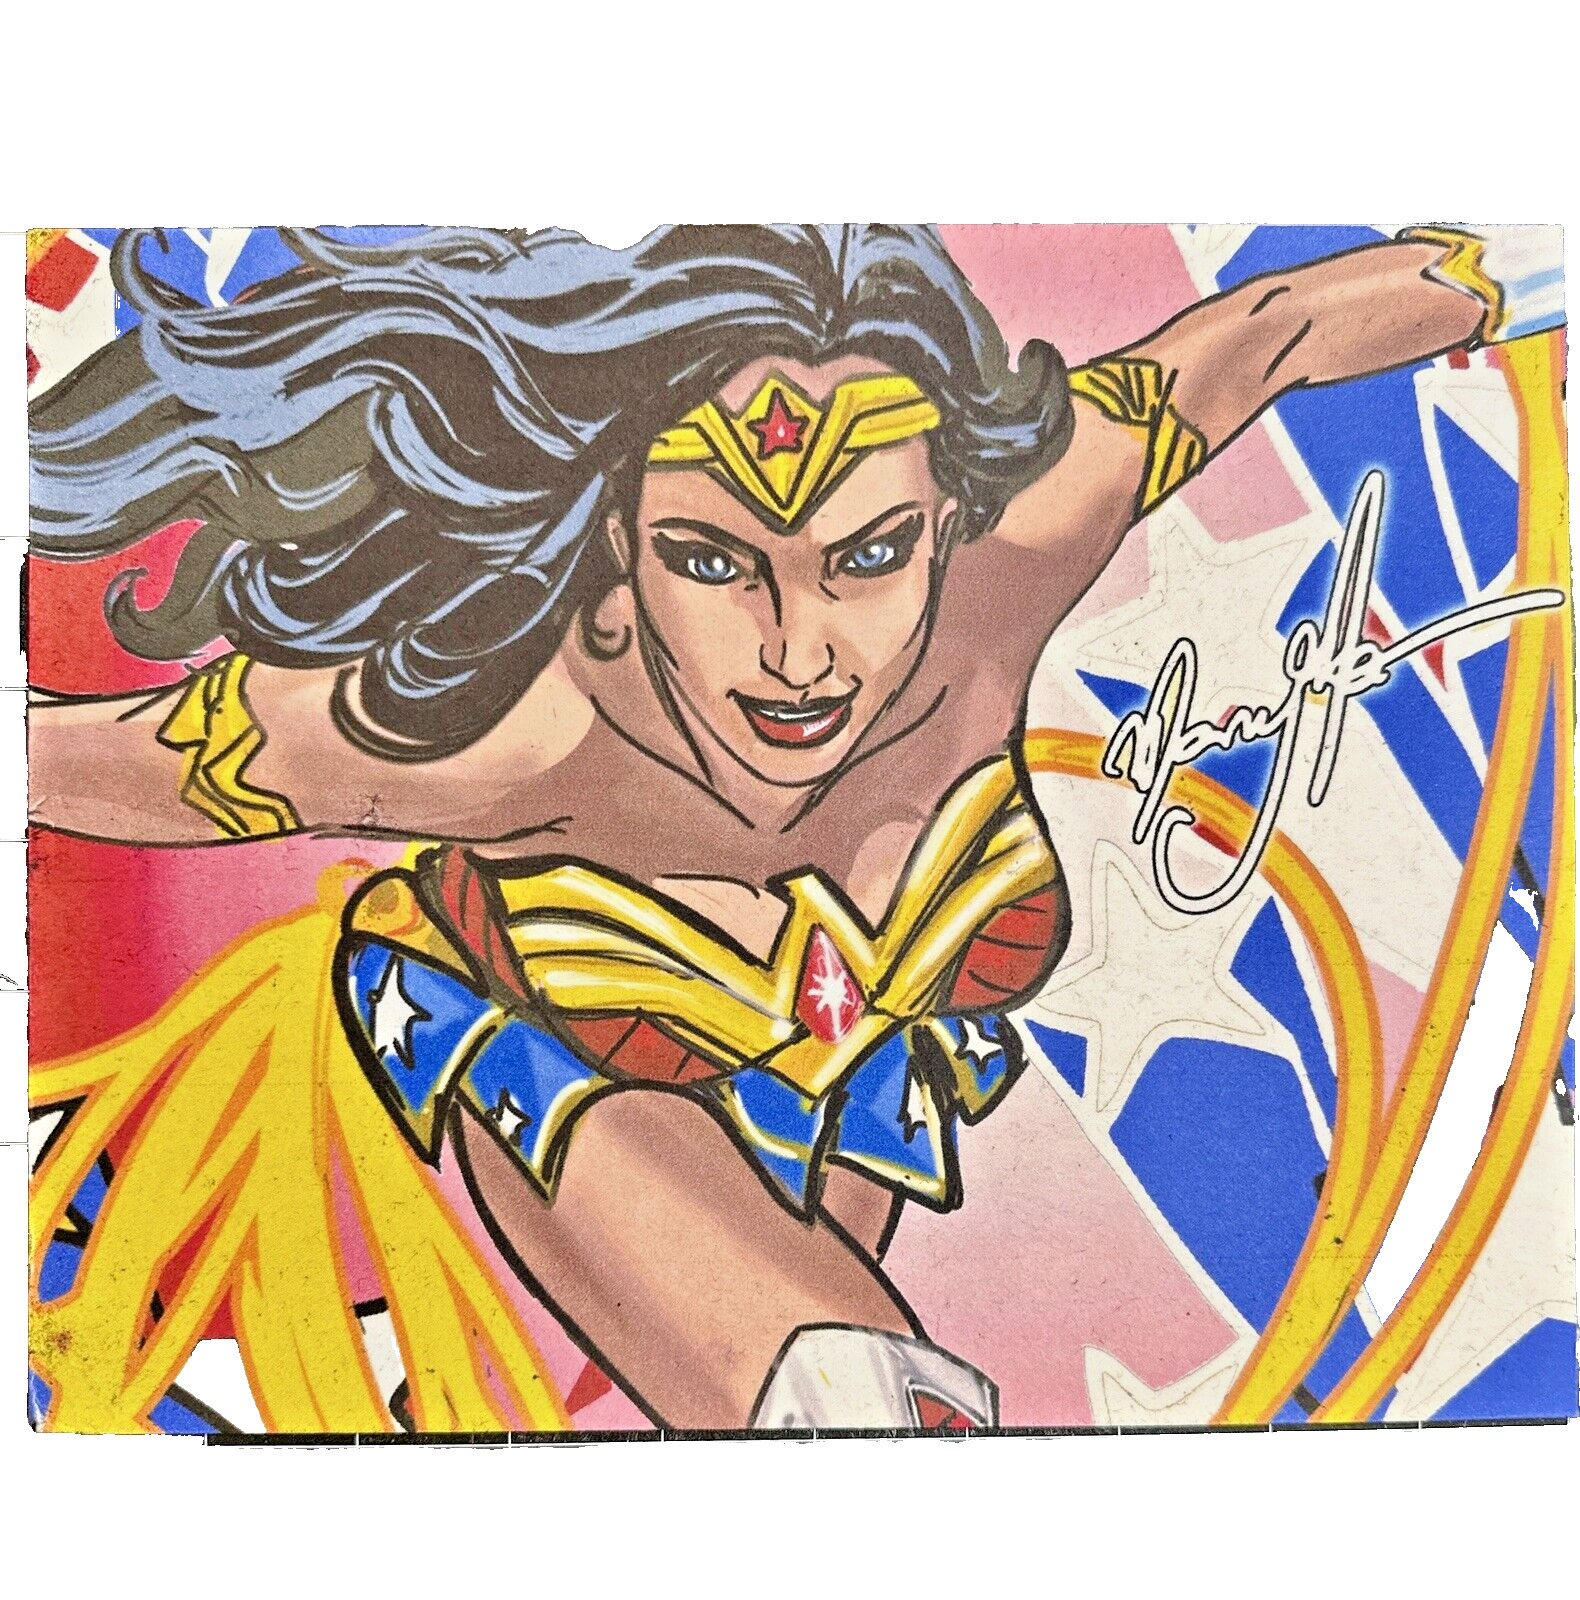 Wonder Woman original comic art on watercolor paper by Manny Machado